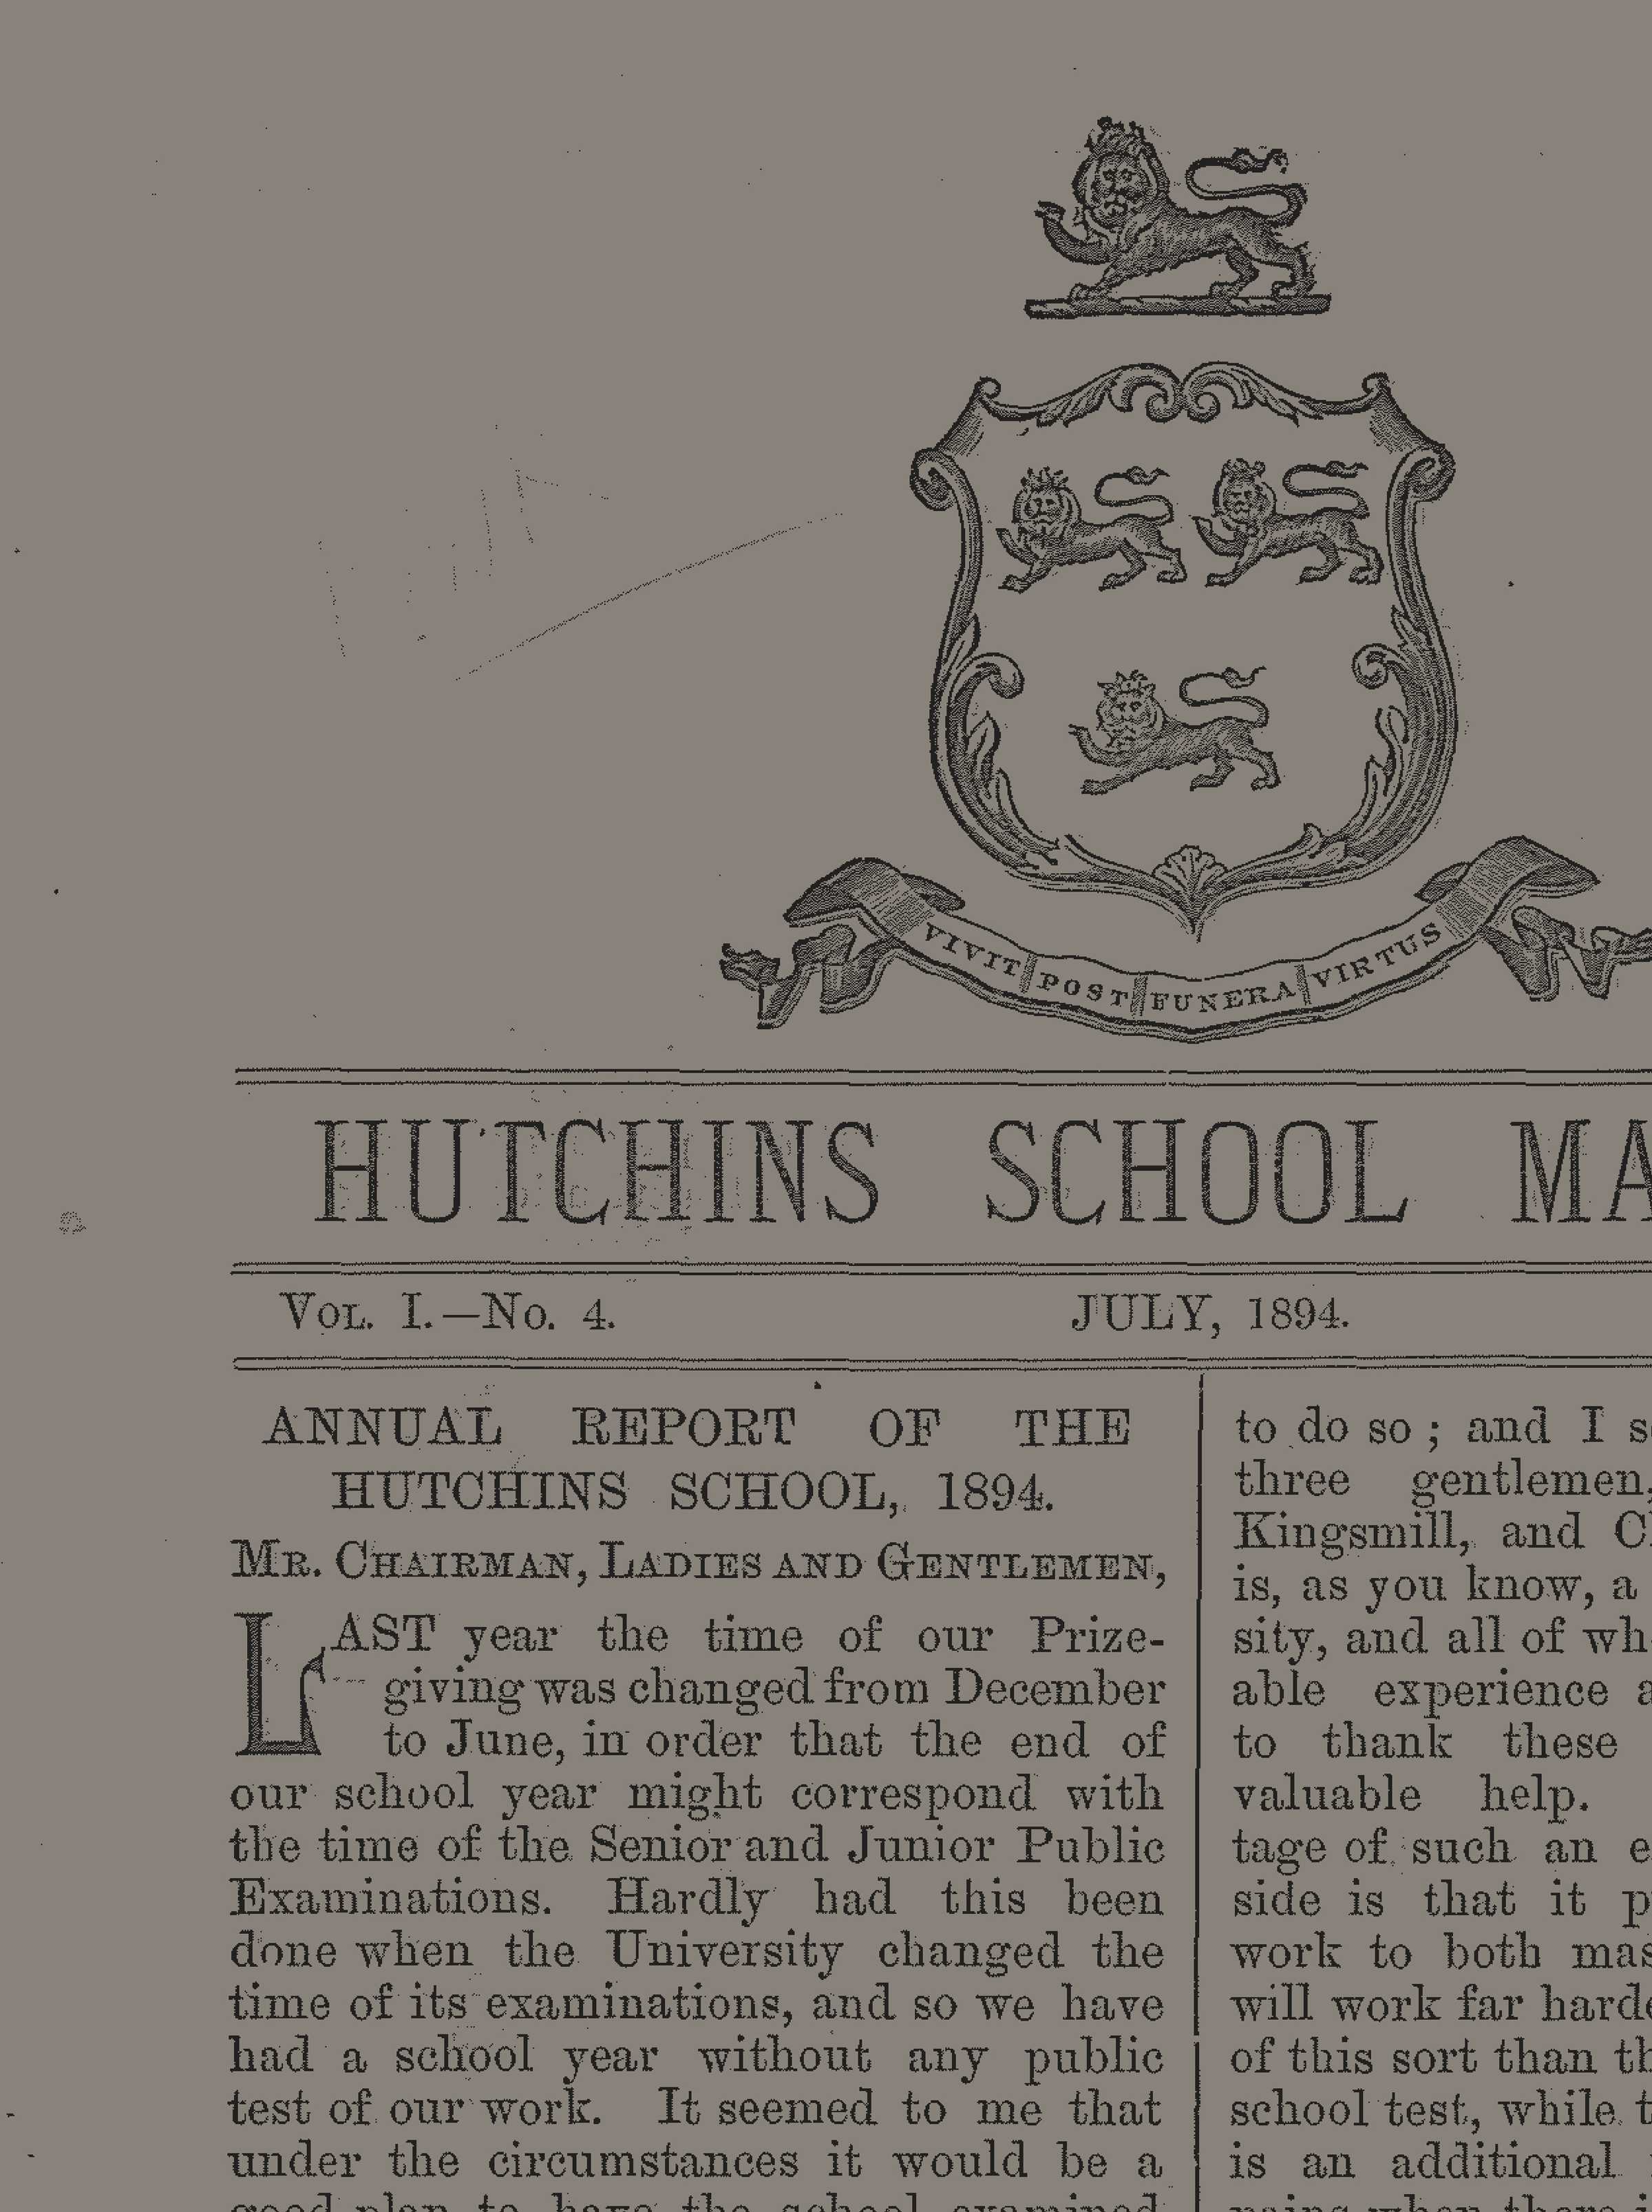 School Magazine, July 1894.